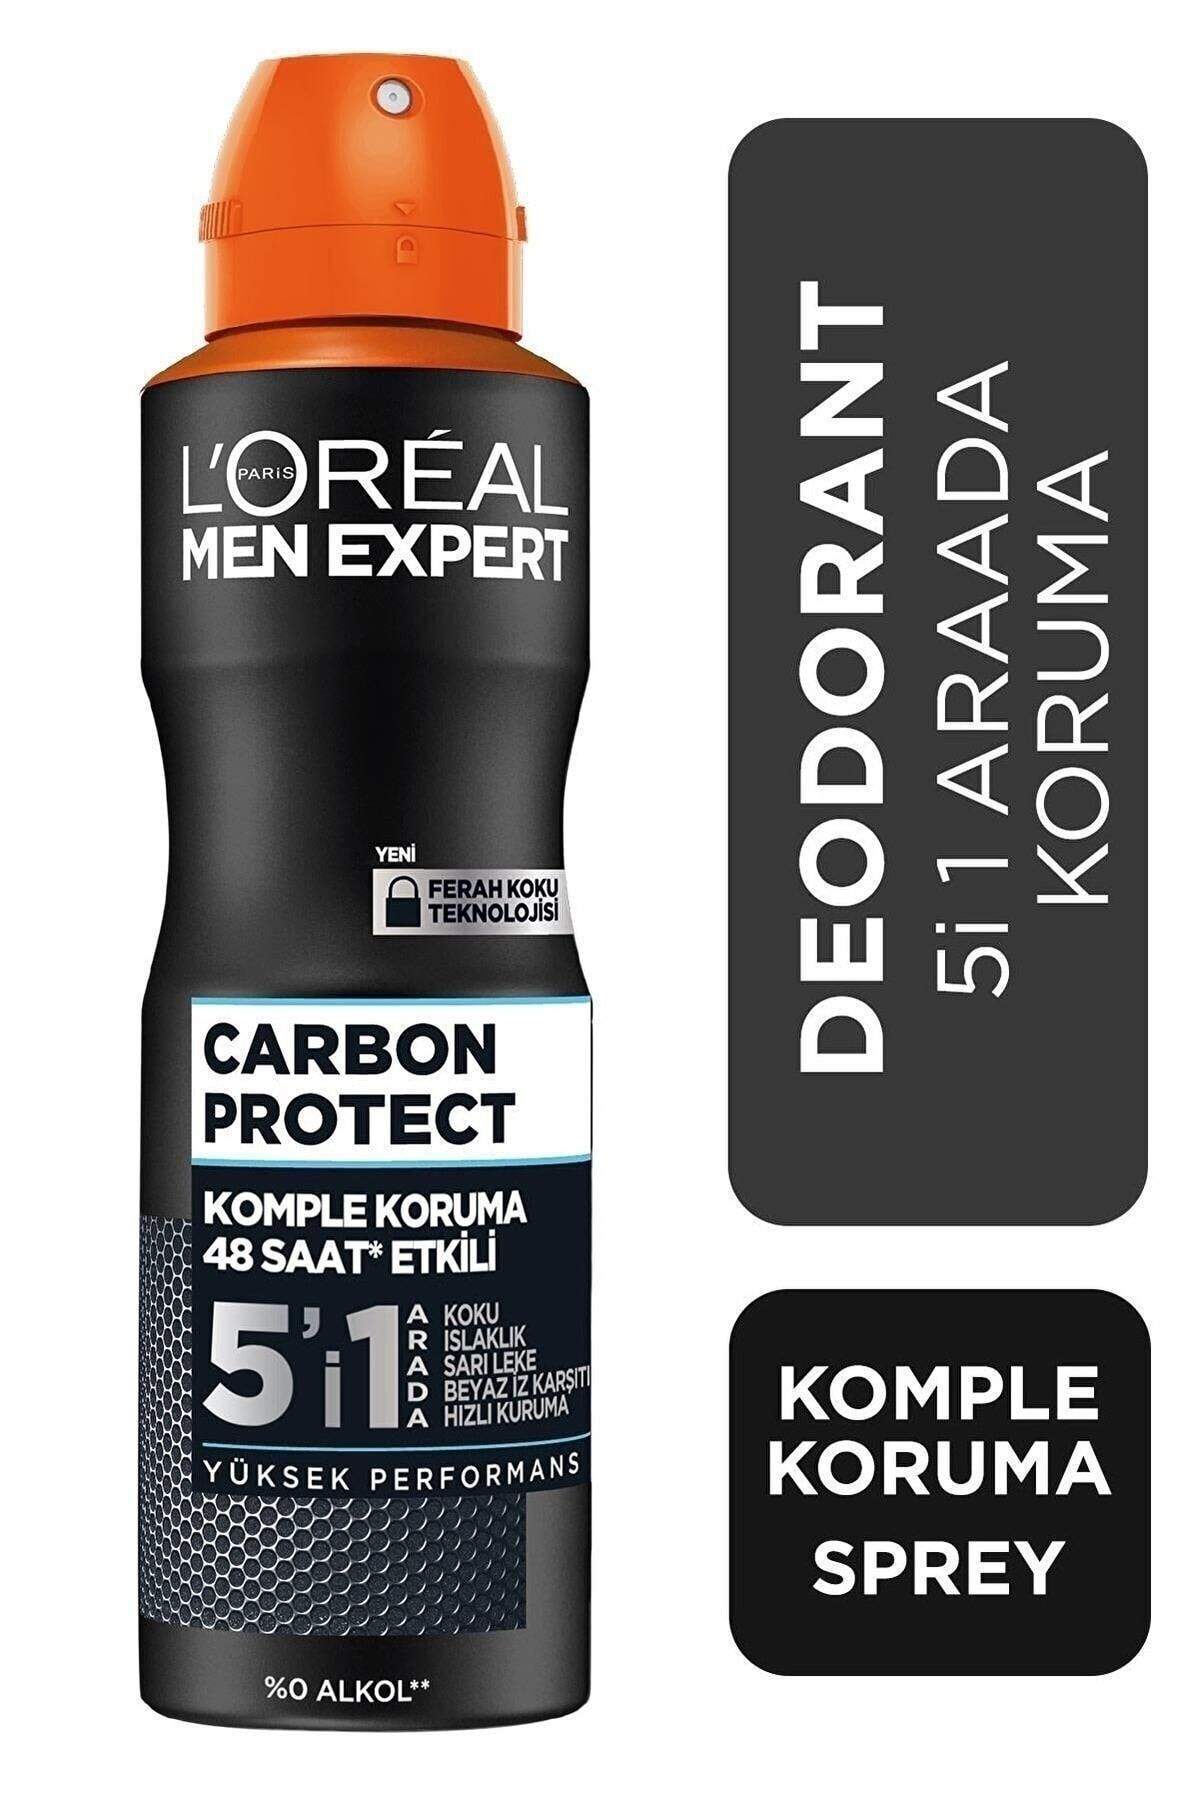 L'Oreal Paris Carbon Protect Anti Perspirant 5'i 1 Arada Erkek Sprey Deodorant 150ml